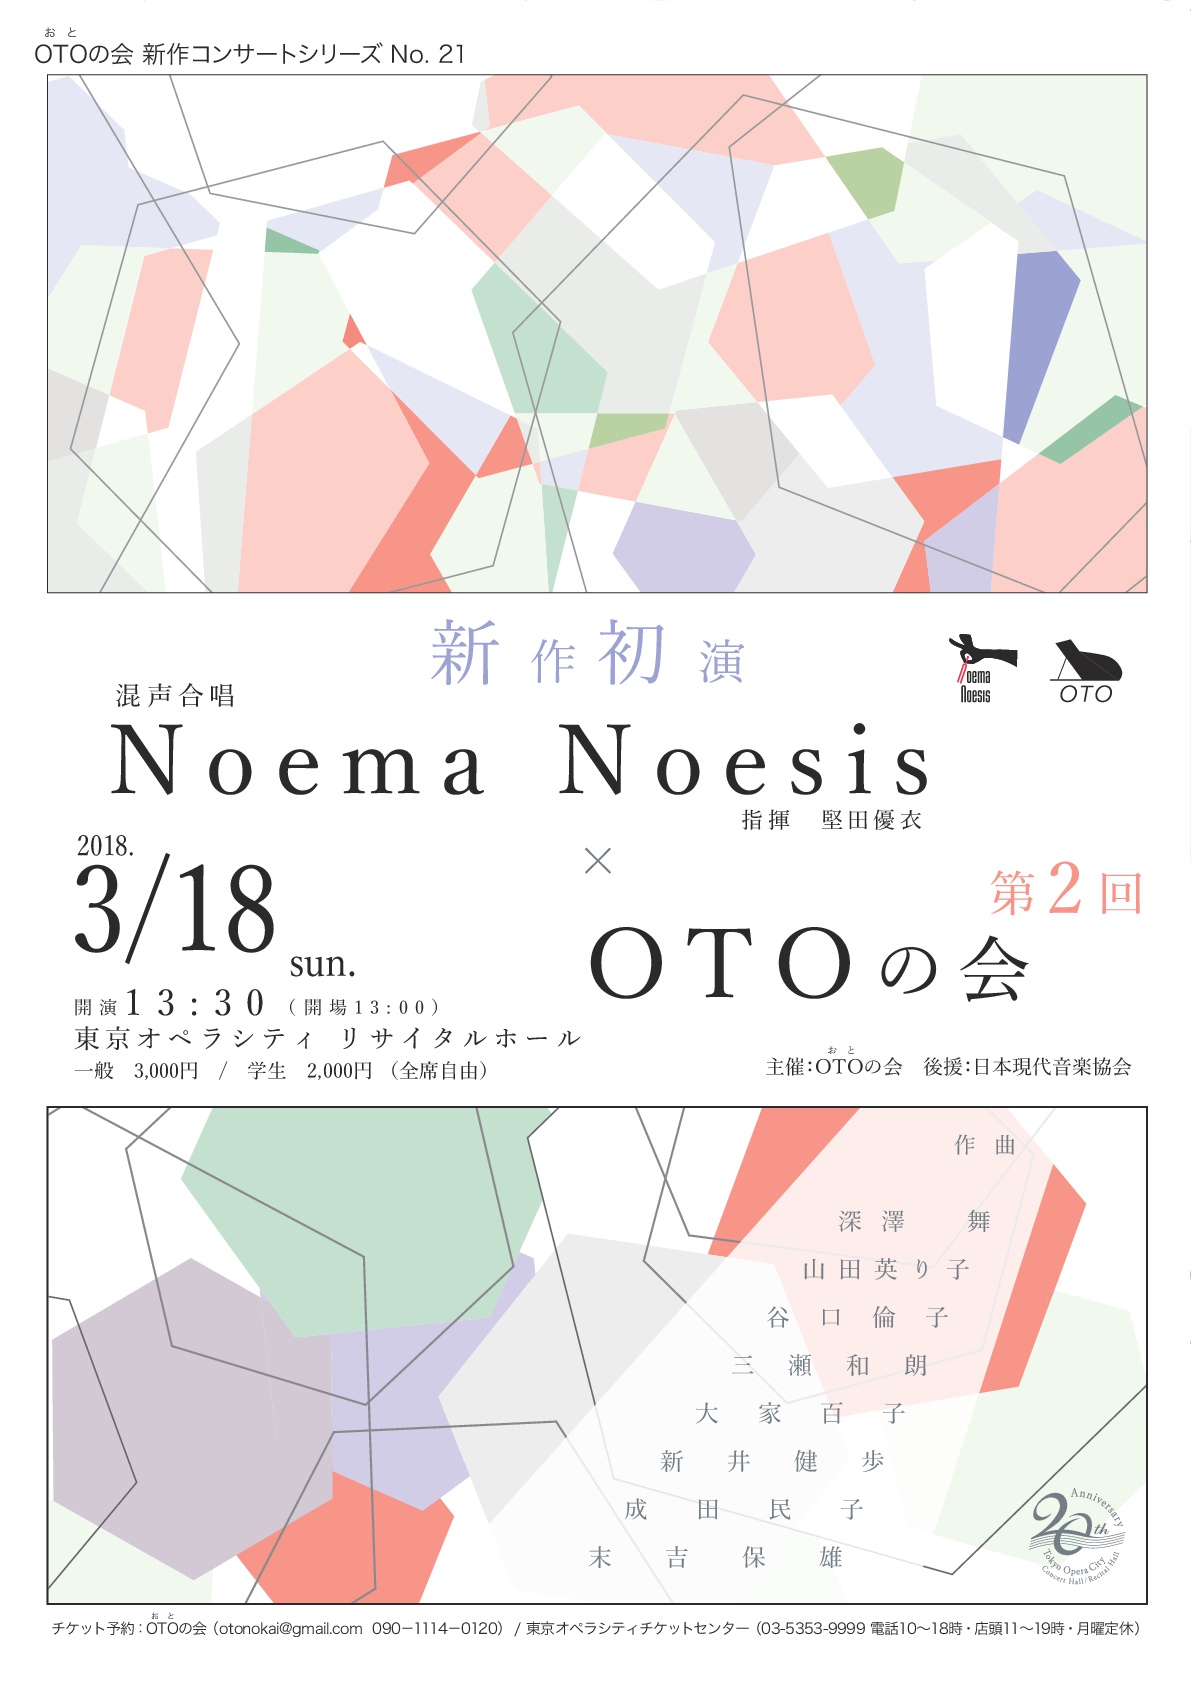 OTOの会新作コンサートシリーズNo.21 Noema Noesis×OTOの会 第2回